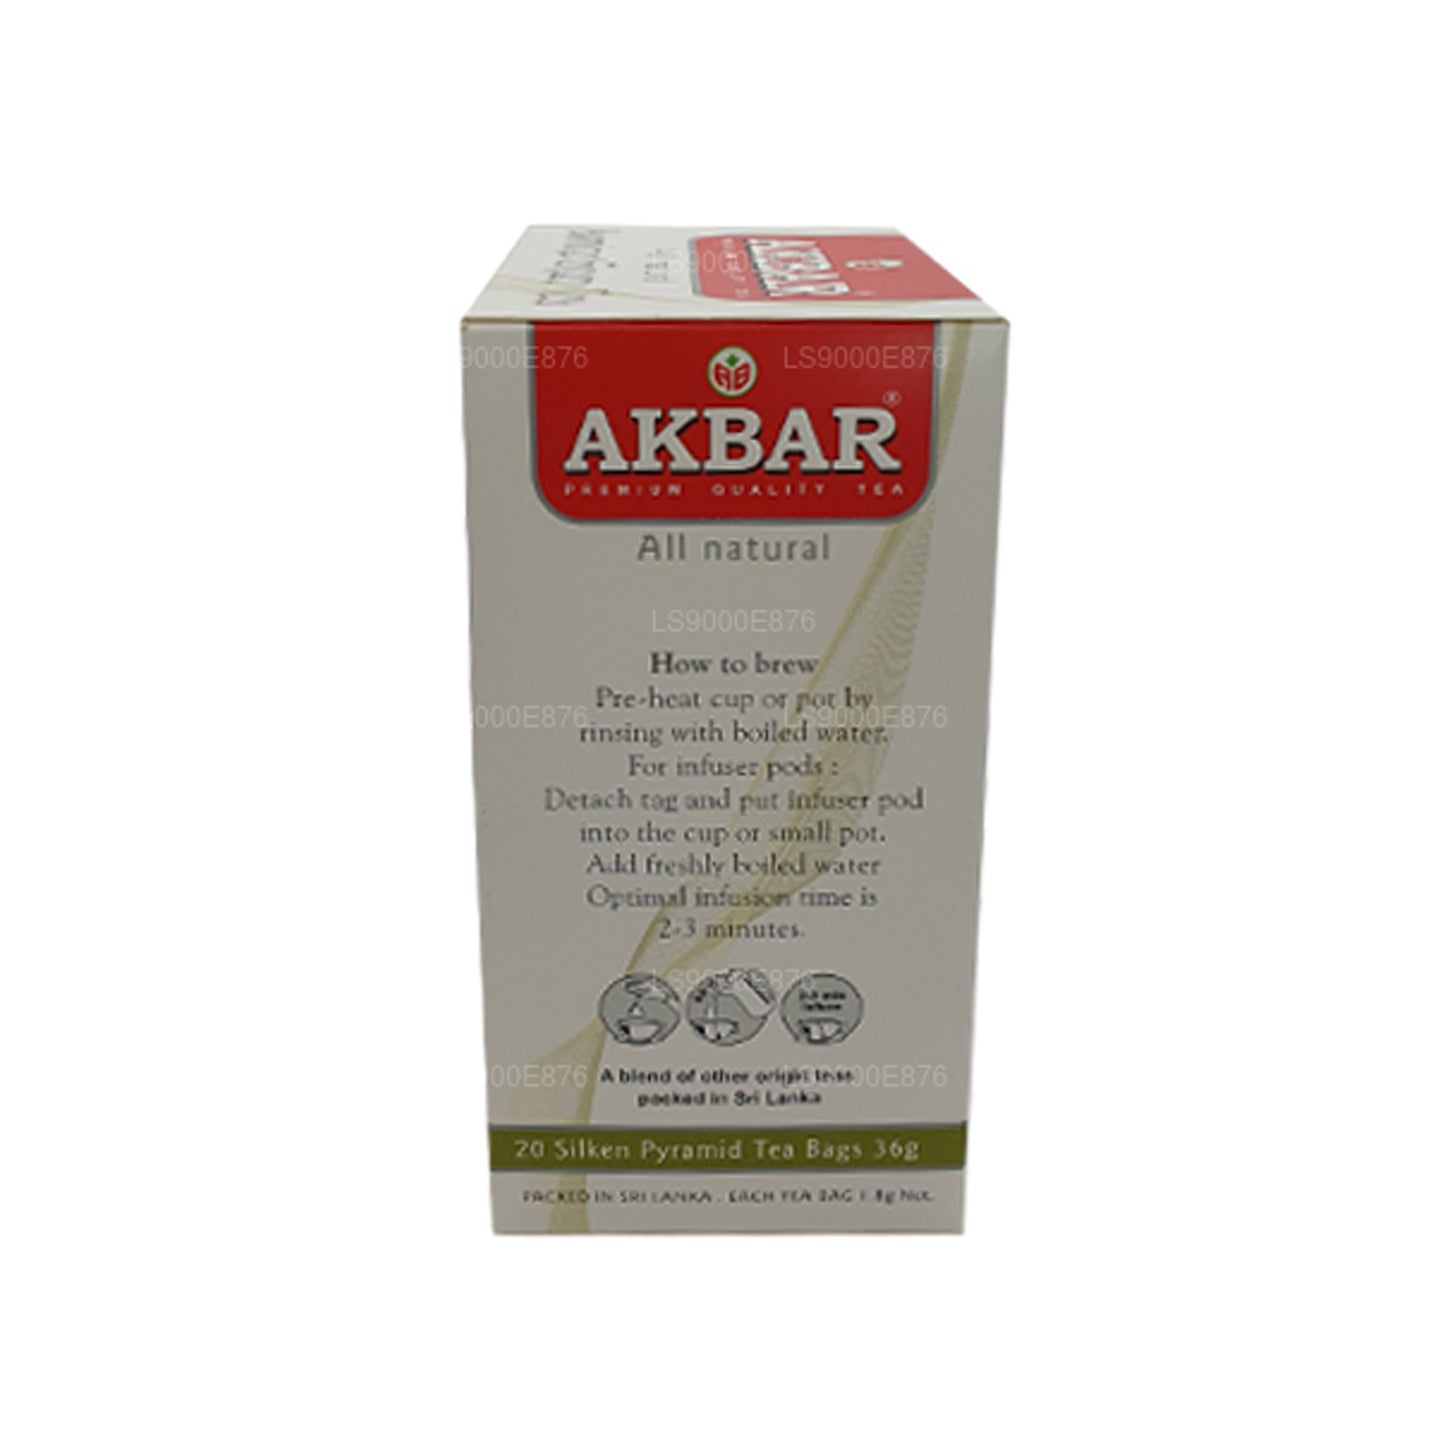 Akbar Jasmine grøn te (36g) 20 teposer